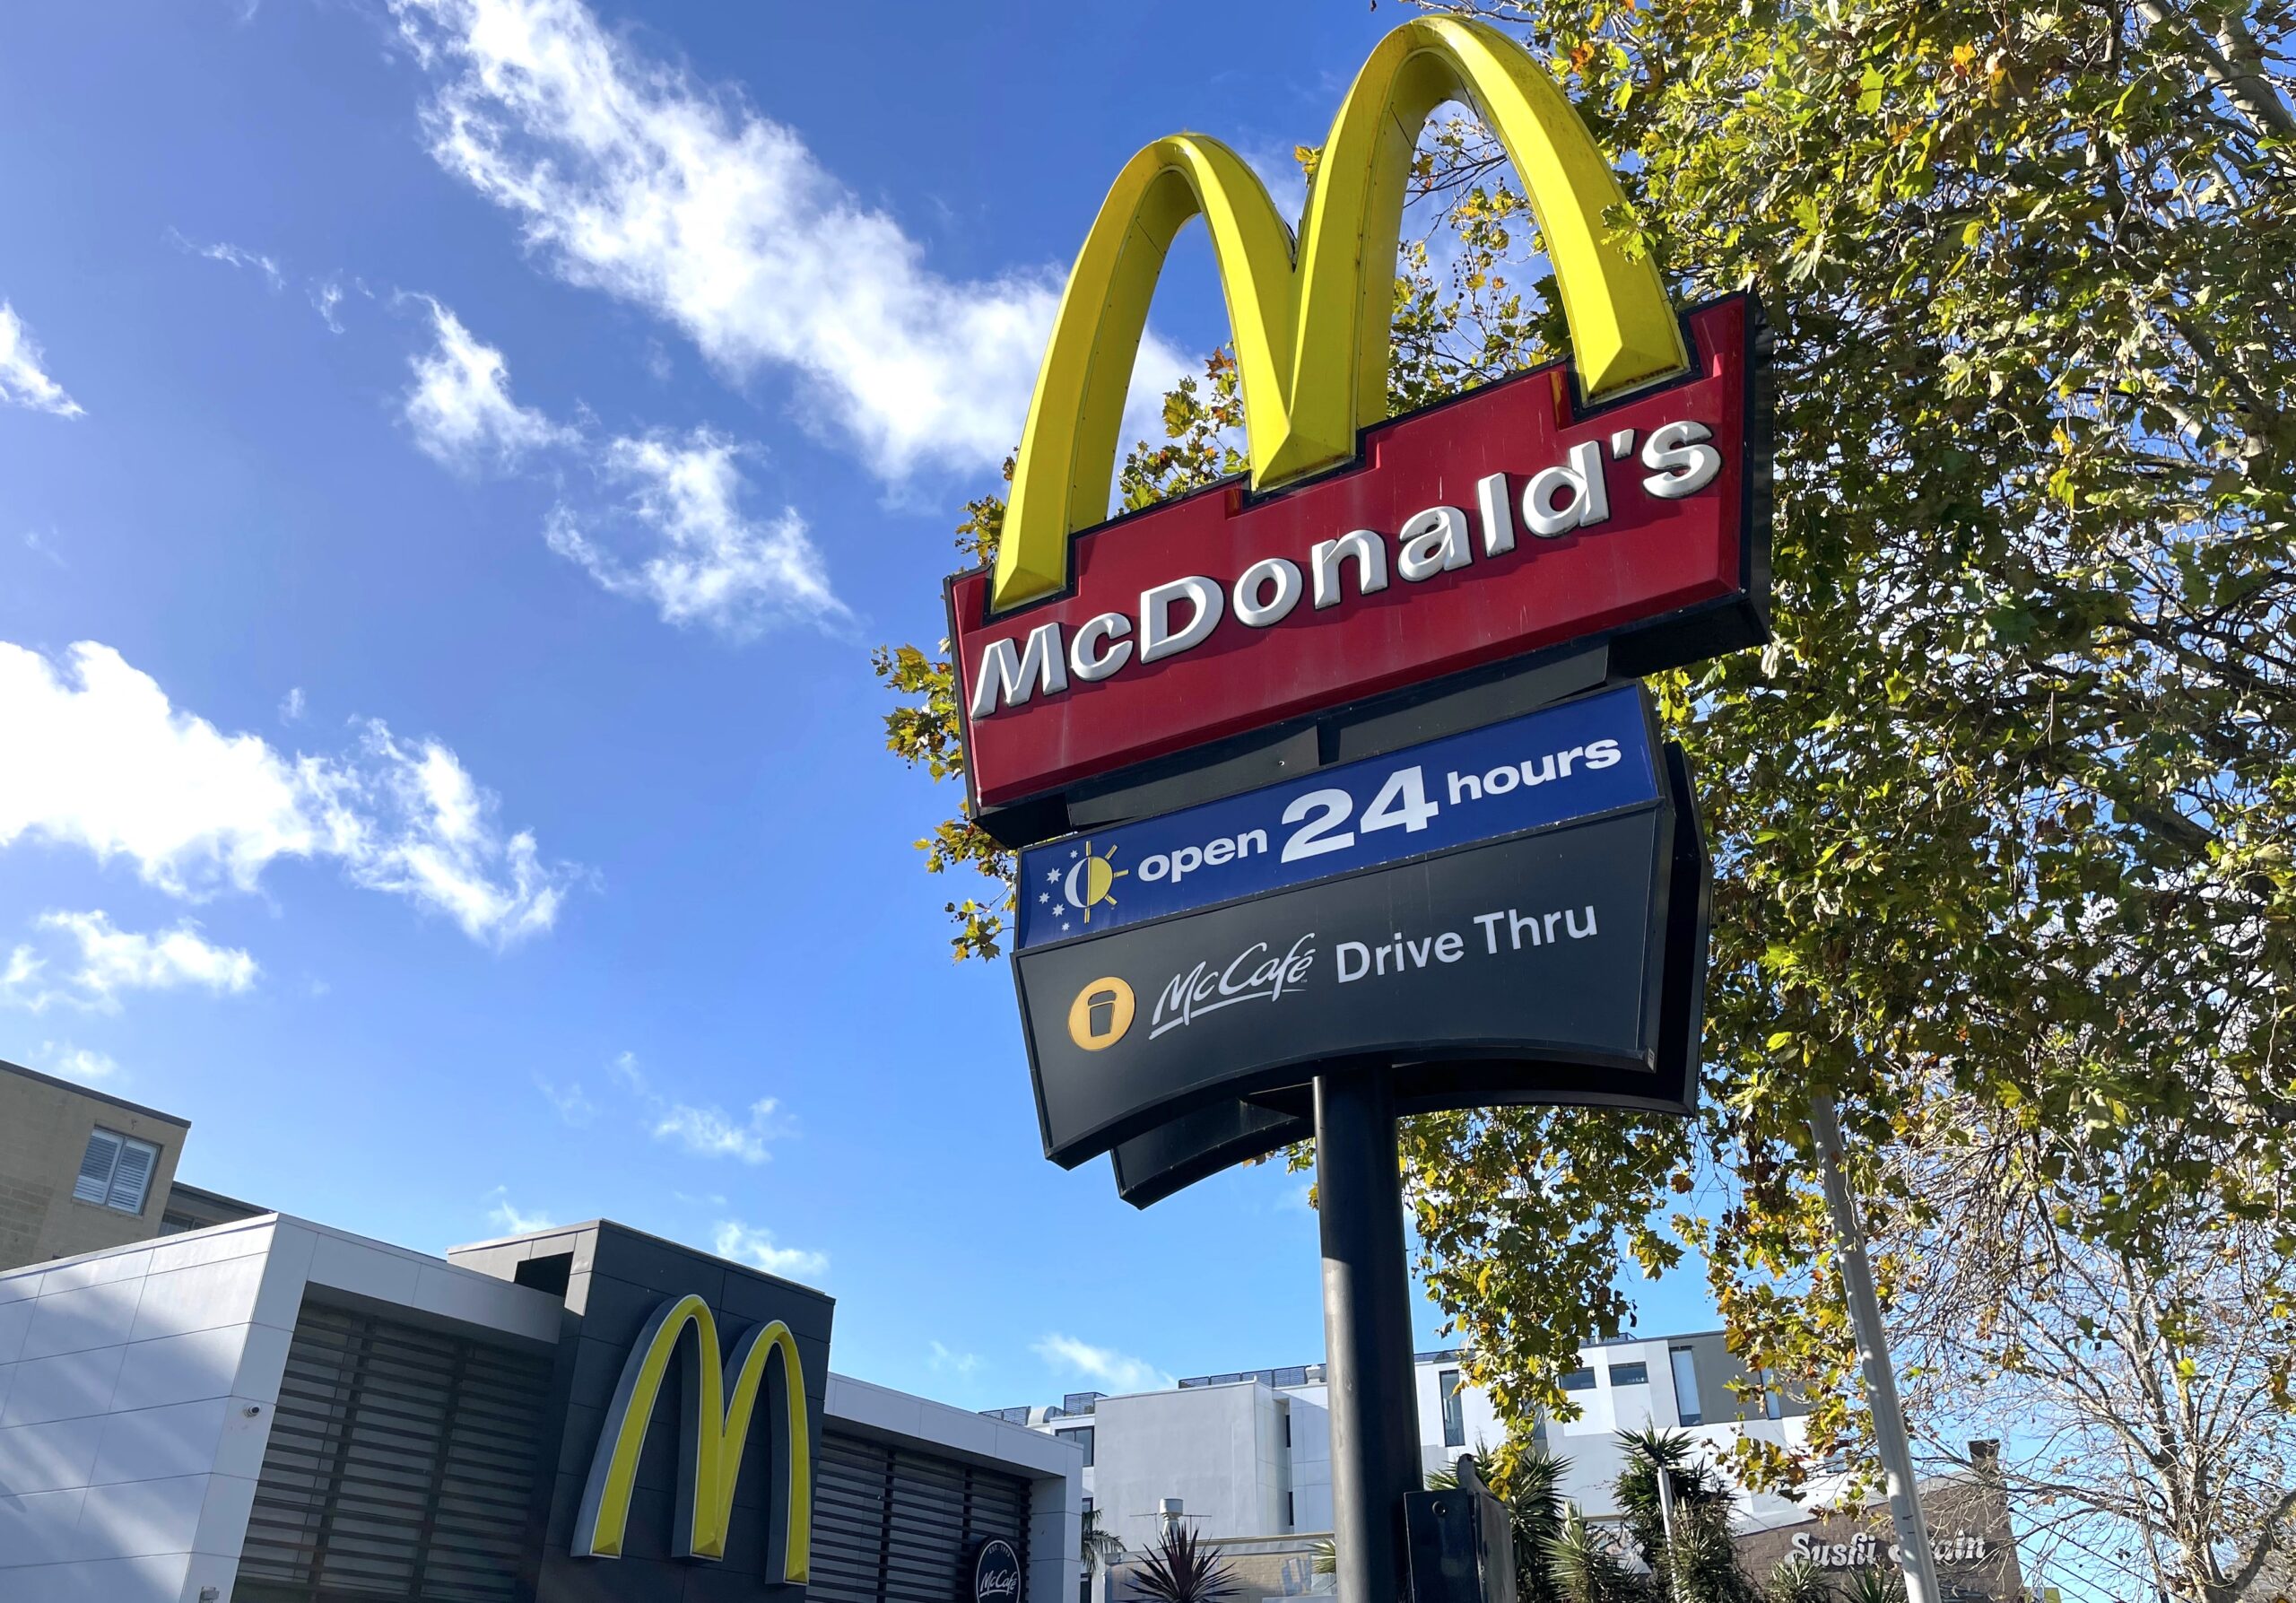 Bird flu curbs McDonald's breakfast in Australia